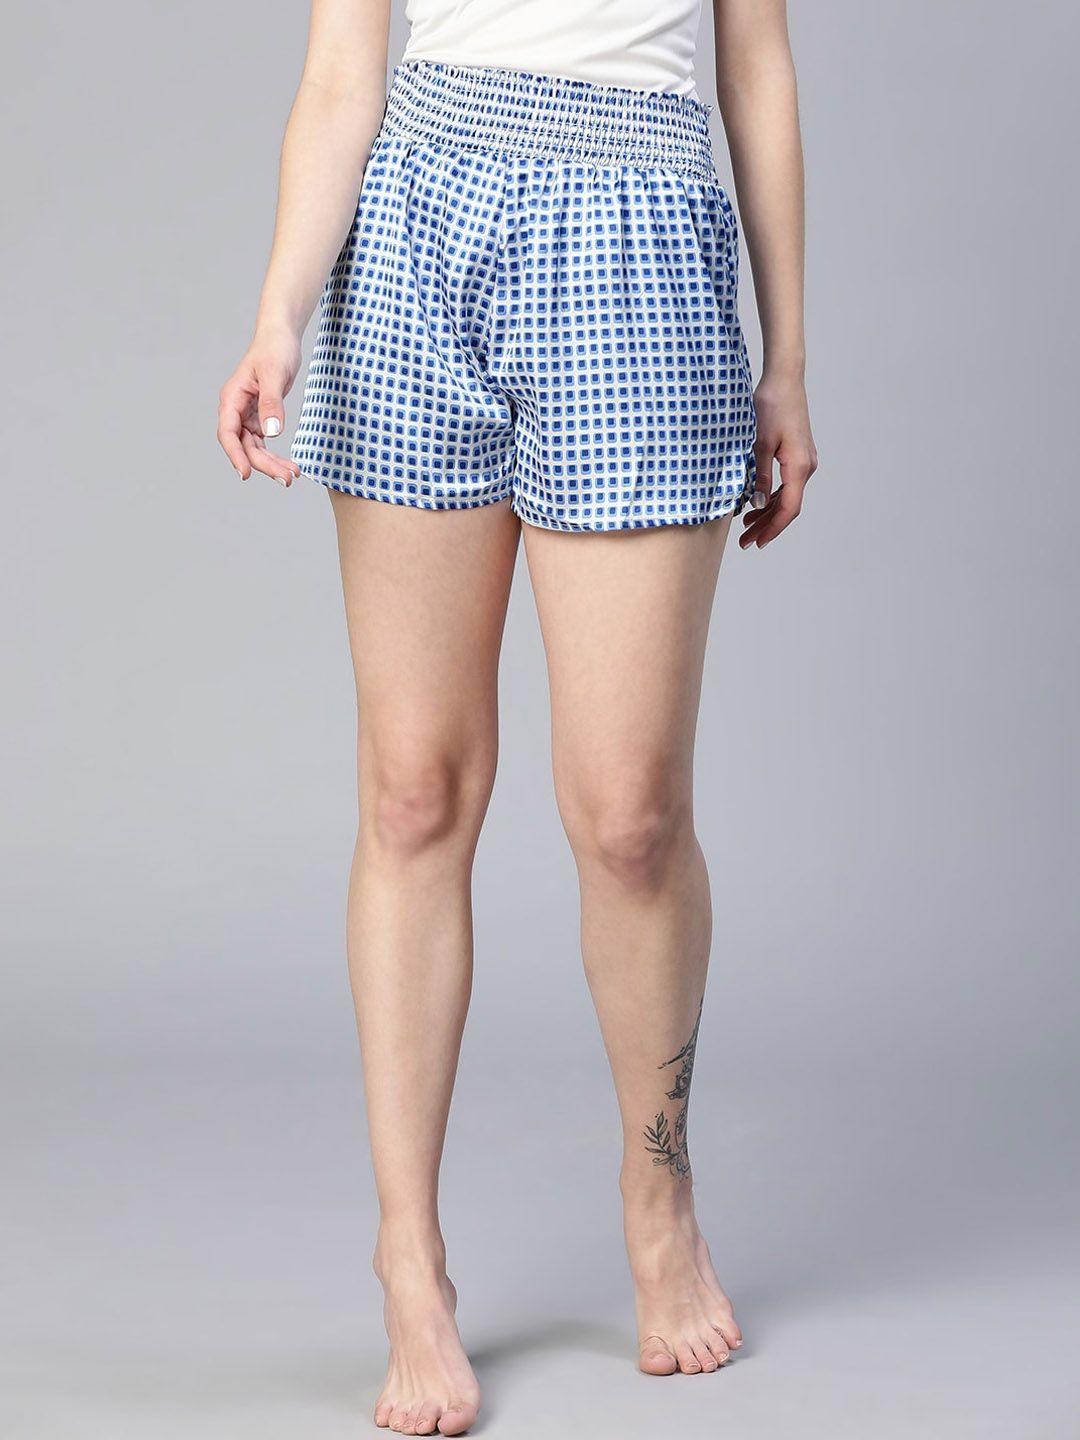 oxolloxo women geometric printed mid rise shorts